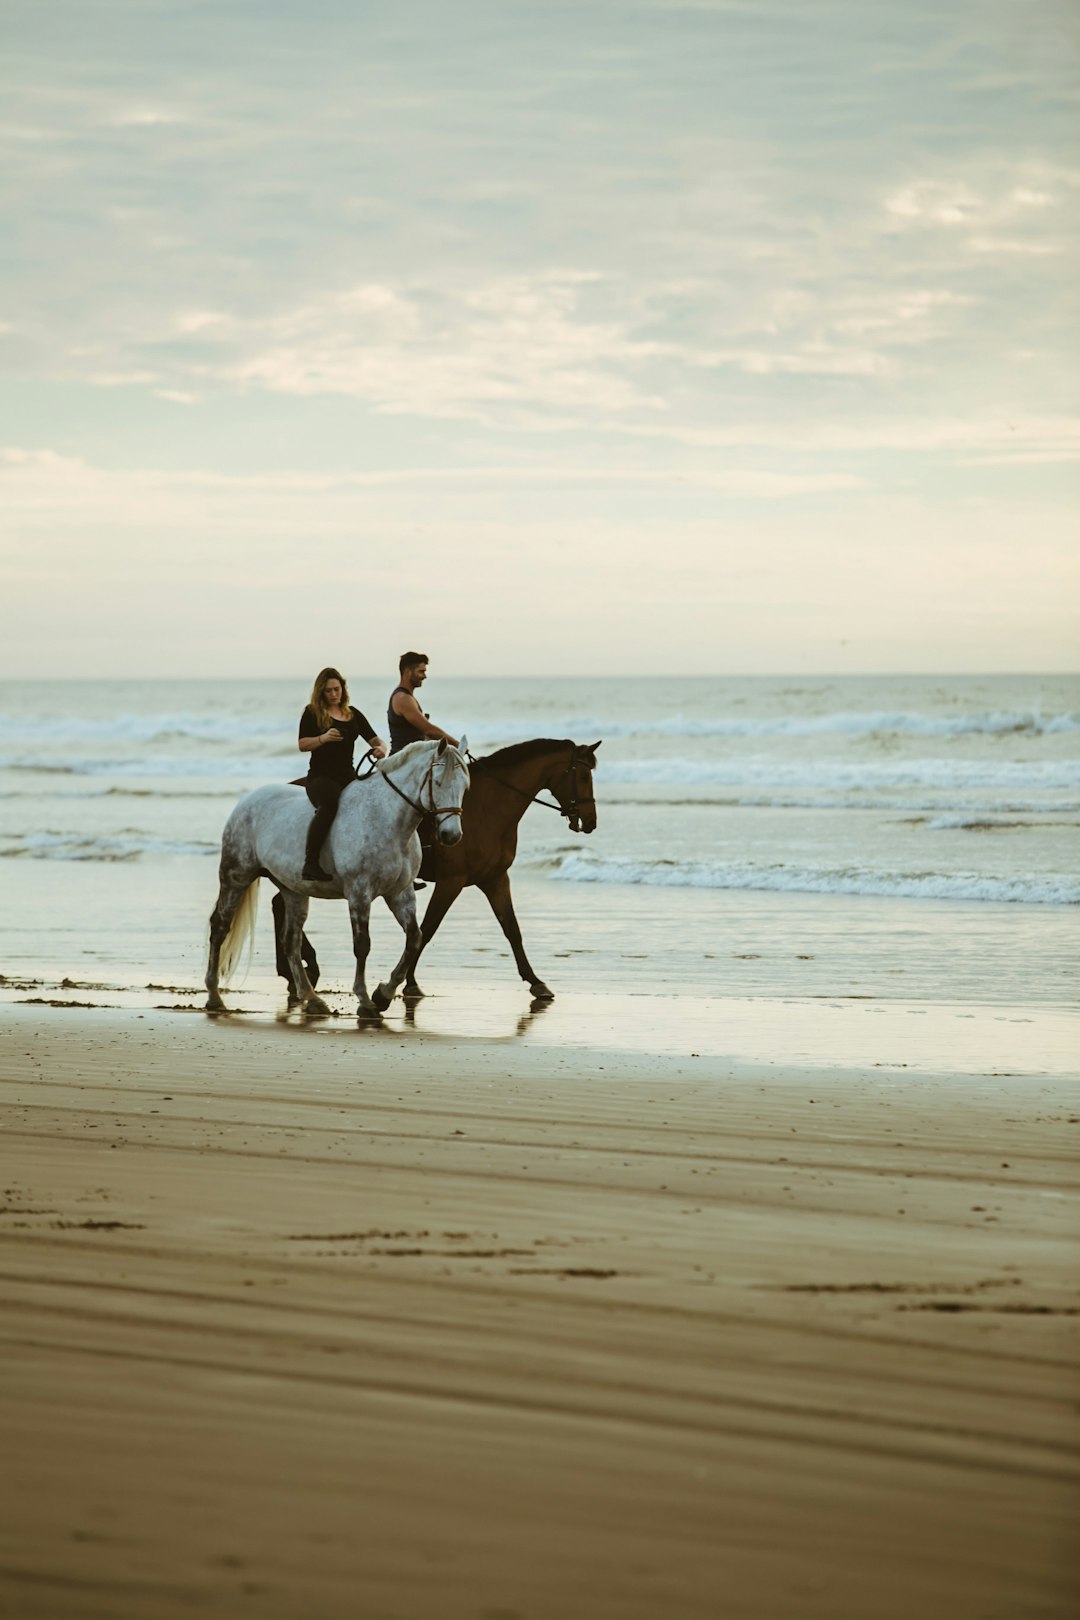 man and woman riding on horse near seashore